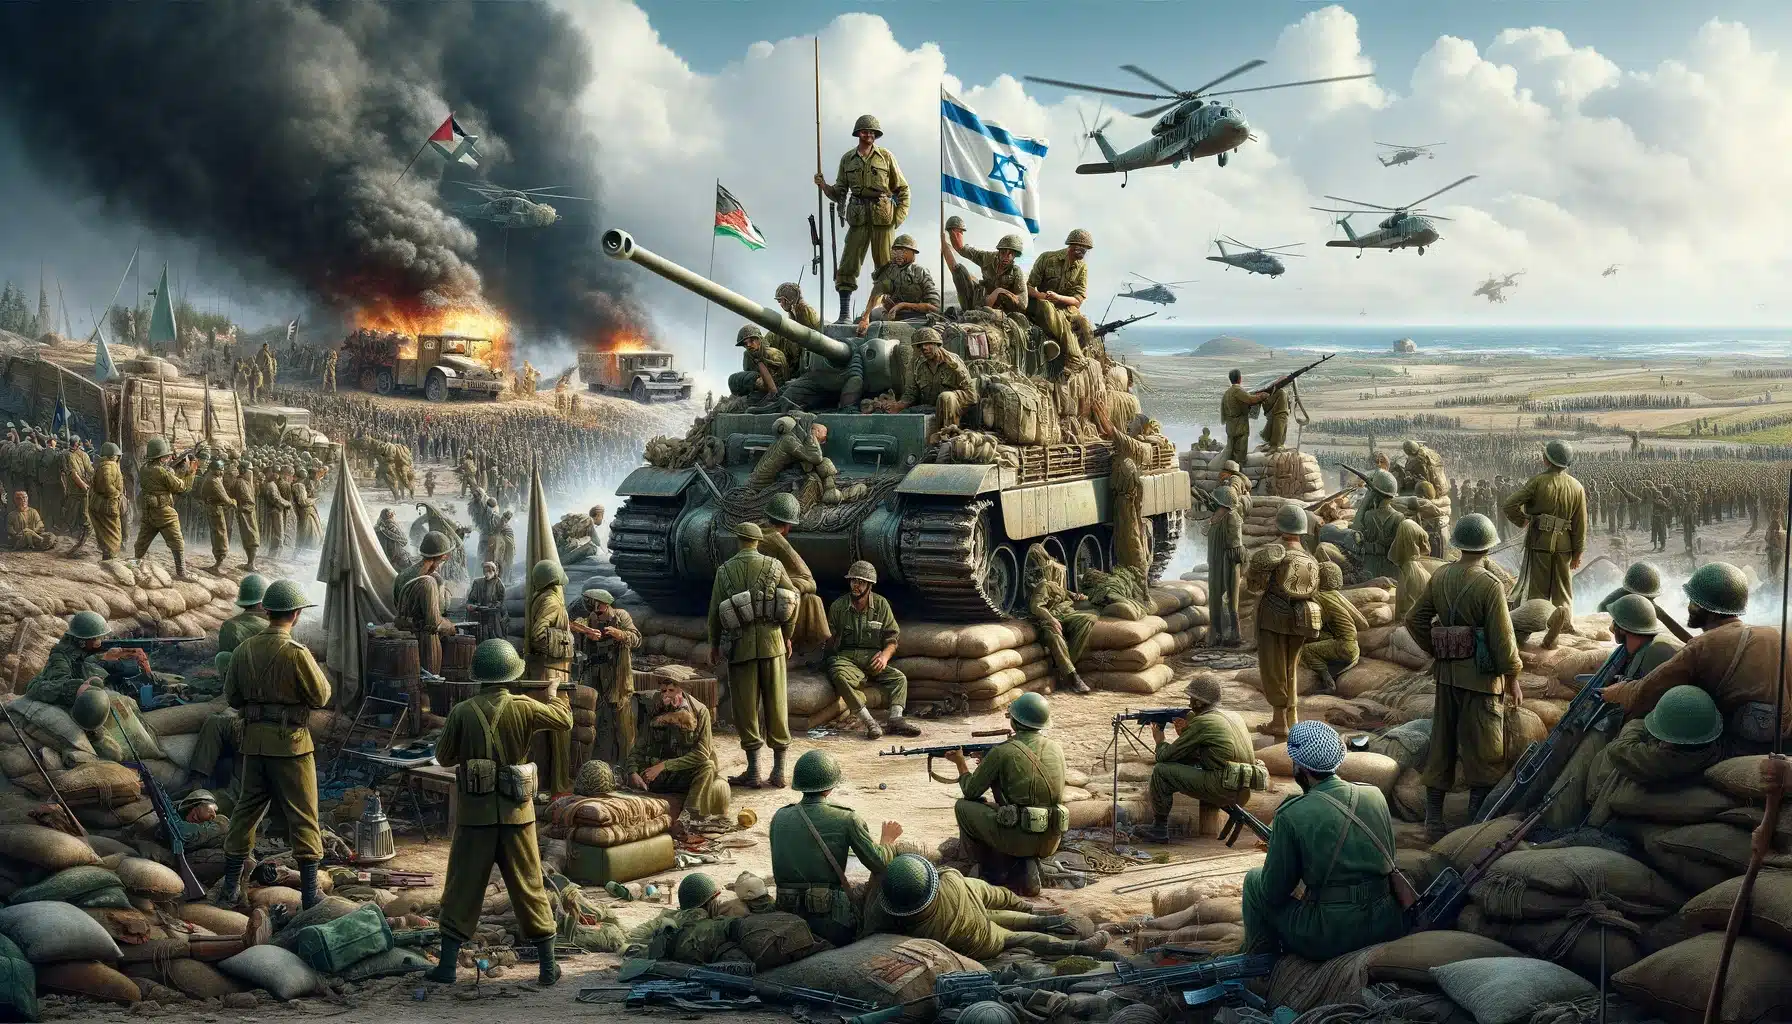 The 1948 Arab-Israeli War in the Israeli-Palestinian Conflict